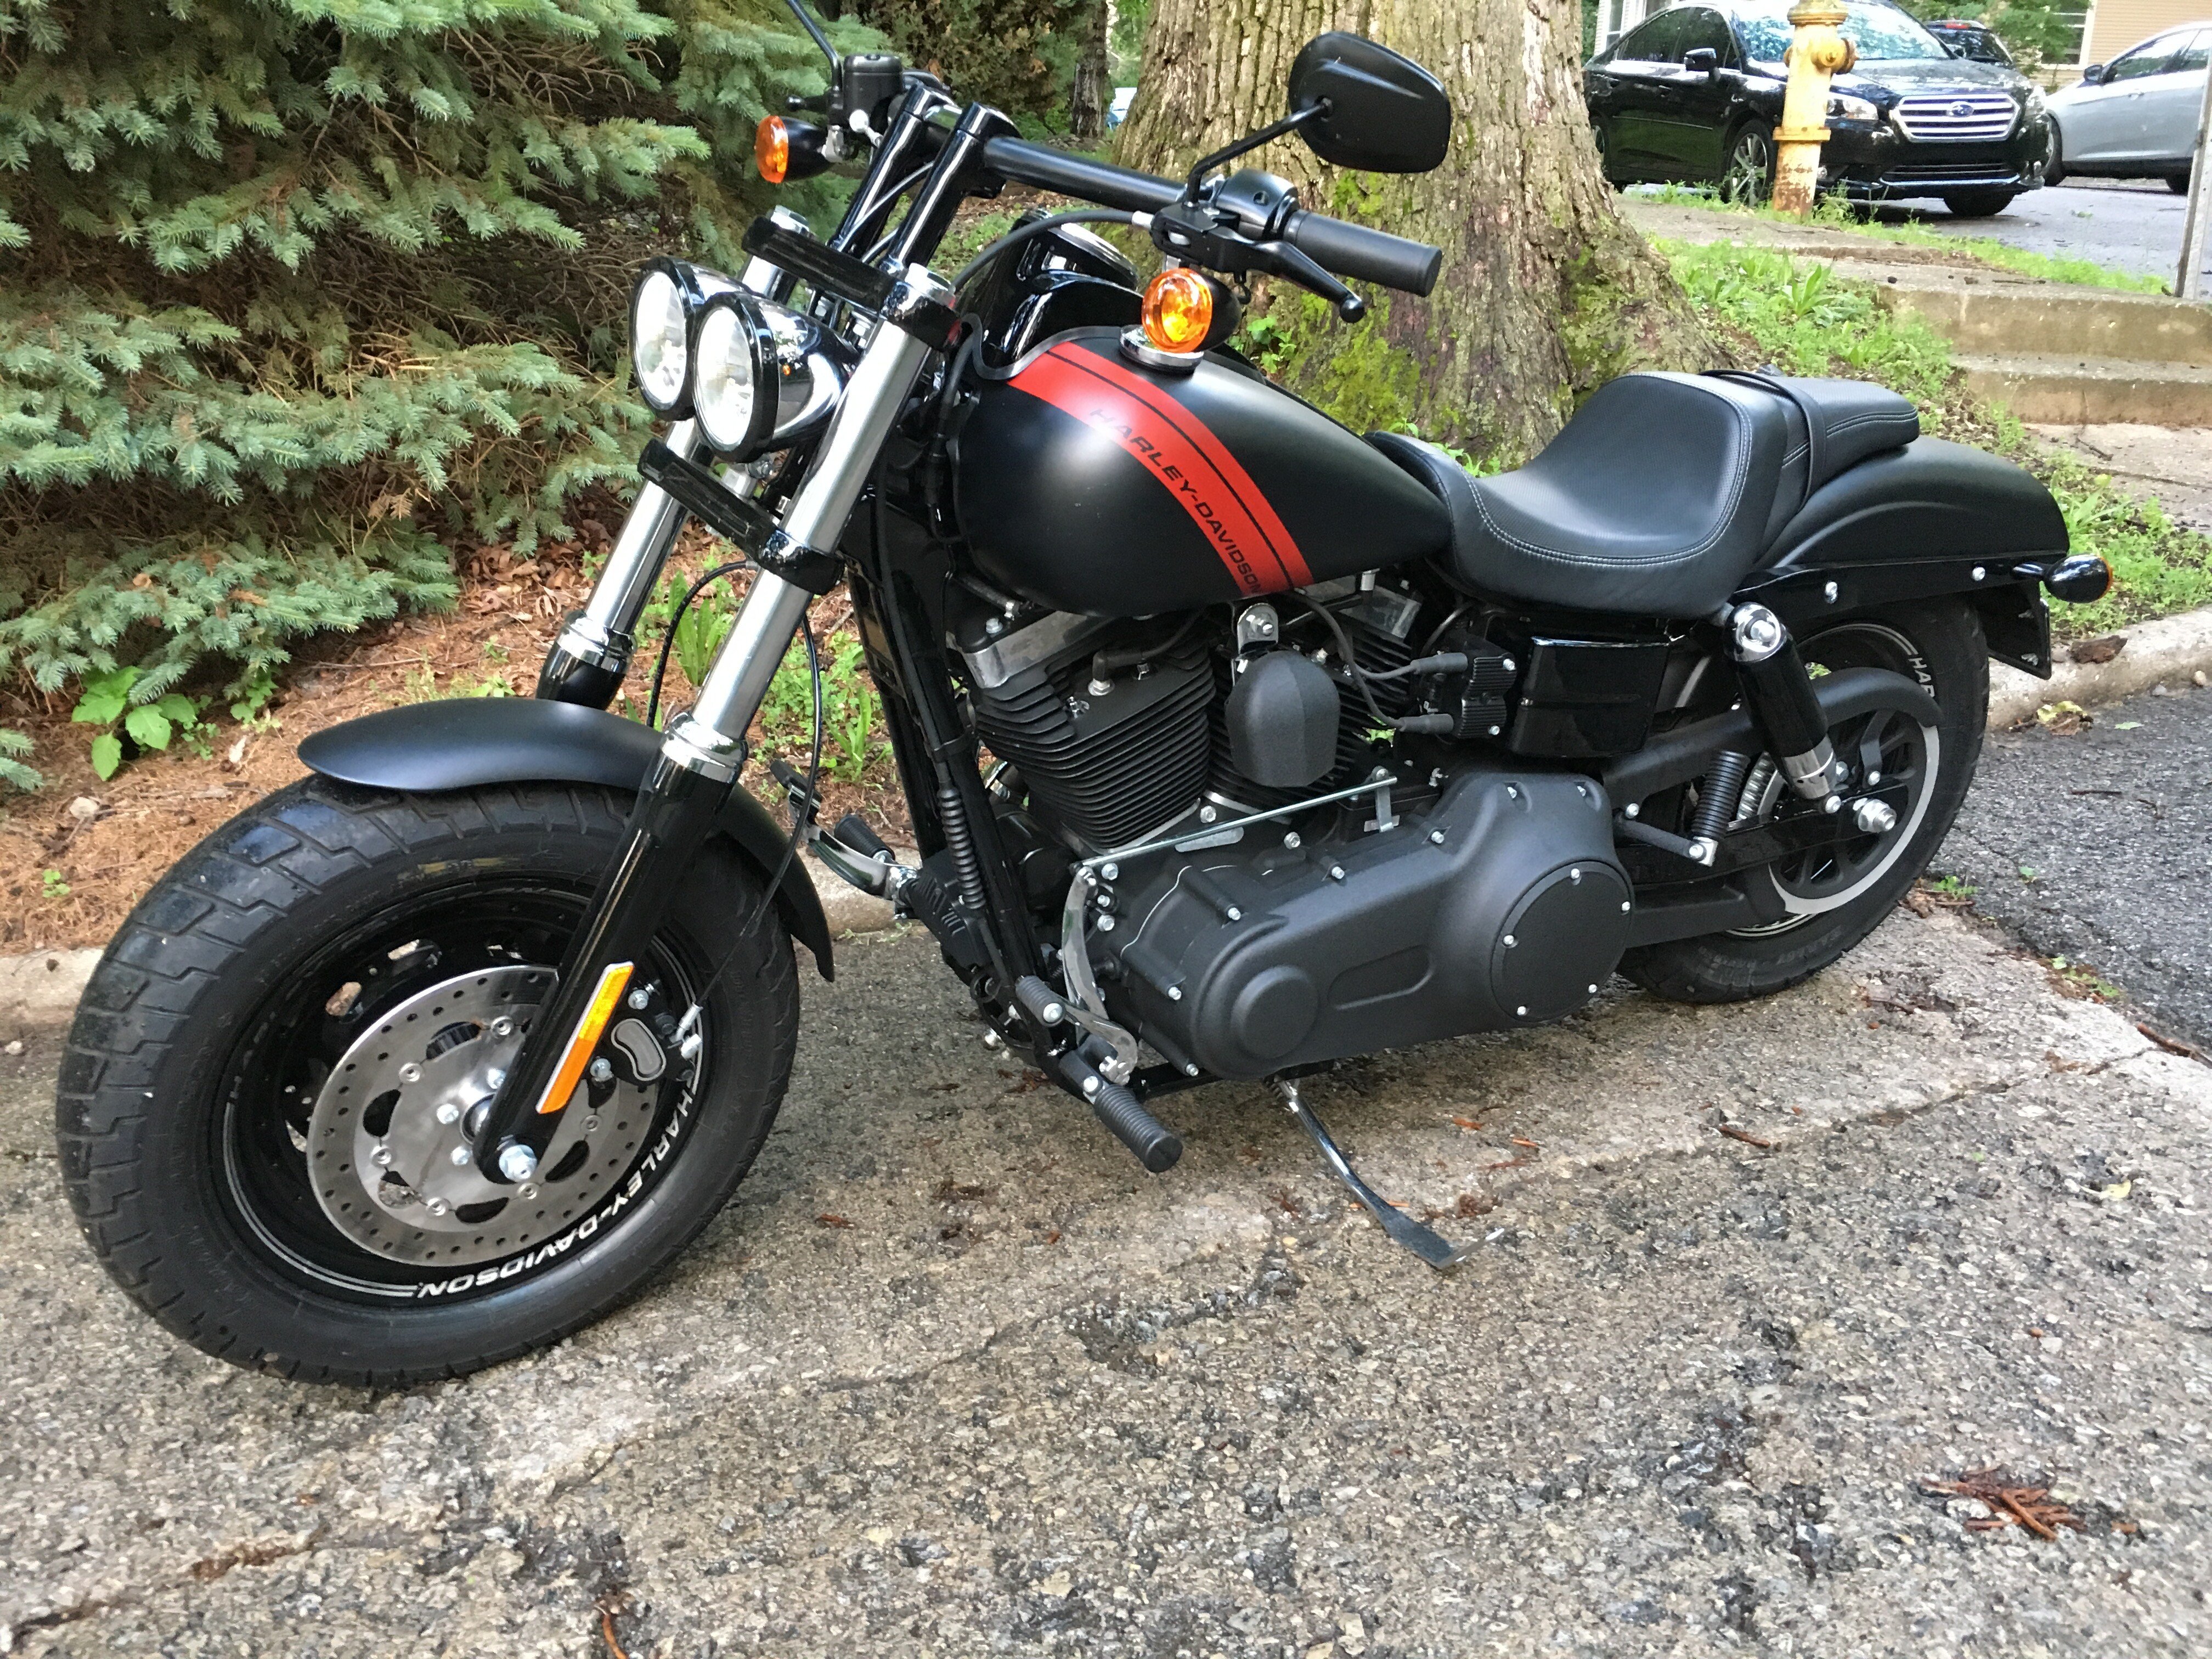 2015 Harley Davidson Dyna 103 Fat Bob For Sale Near Fort Wayne Indiana 46807 Motorcycles On Autotrader